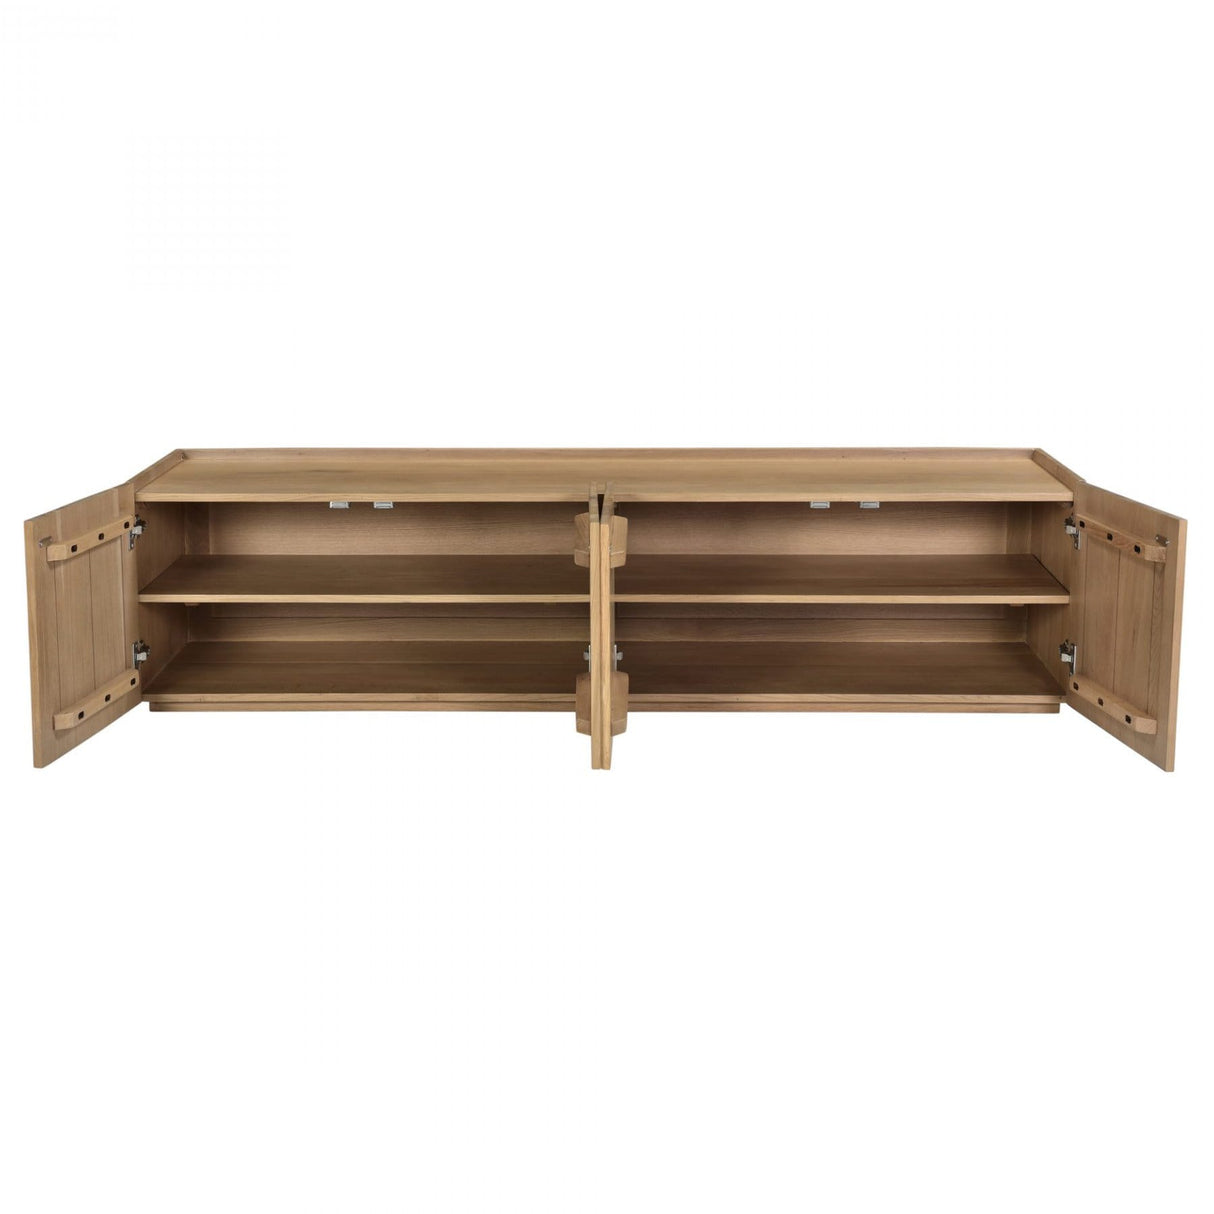 BLU Home Plank Media Cabinet Furniture moes-RP-1021-24 840026425513